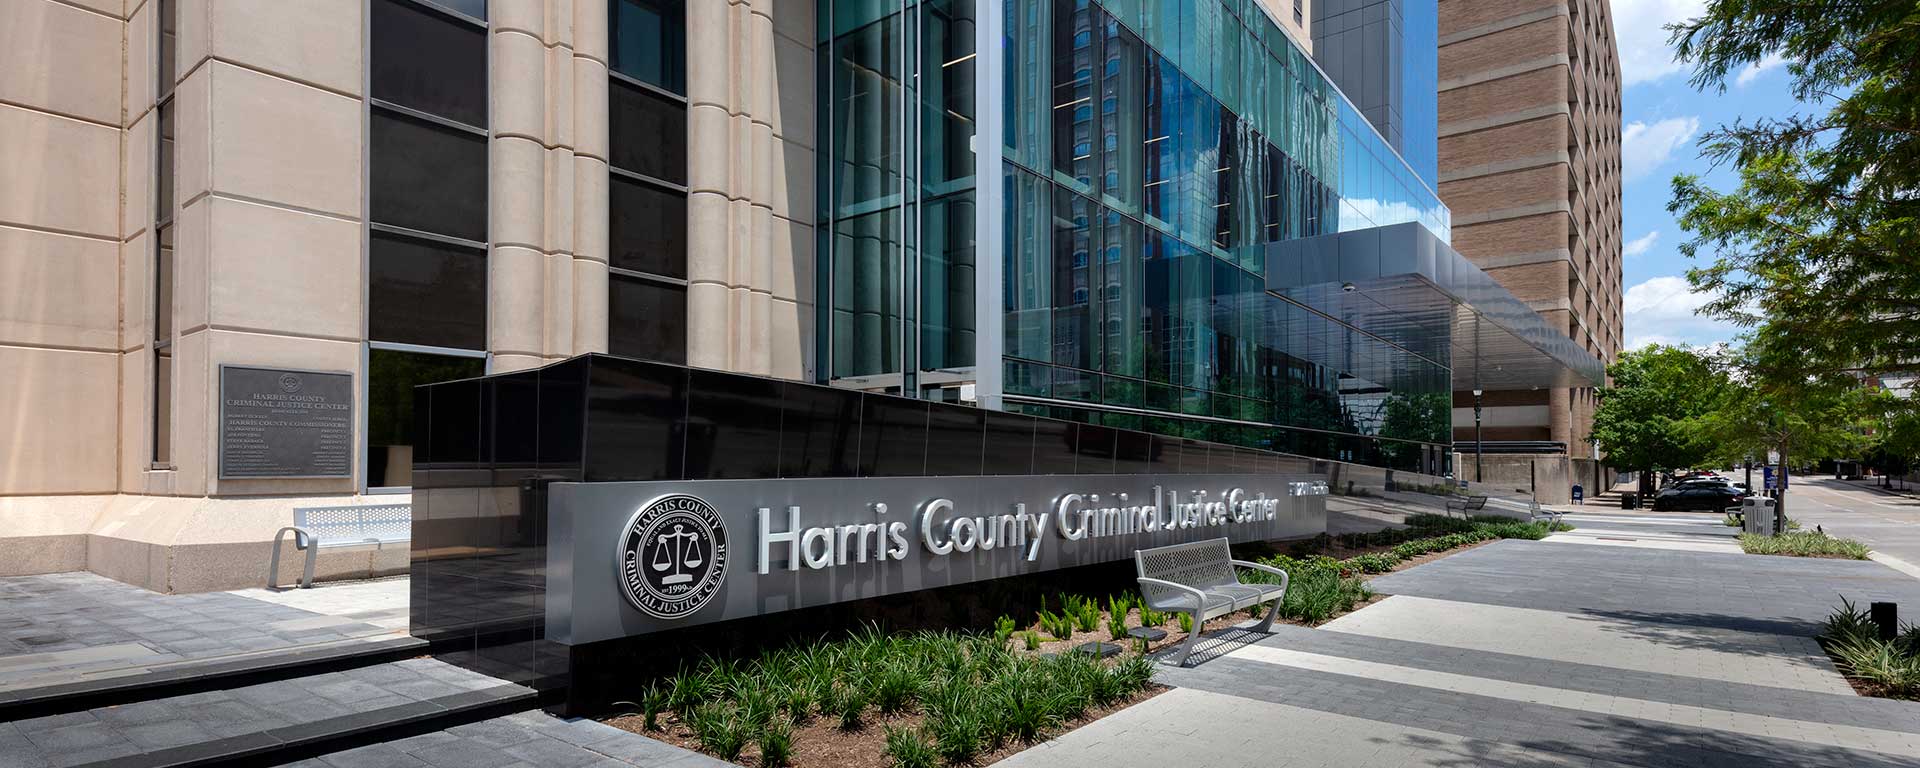 2685-01-Harris-County-Criminal-Justice-Center-1920x768_3